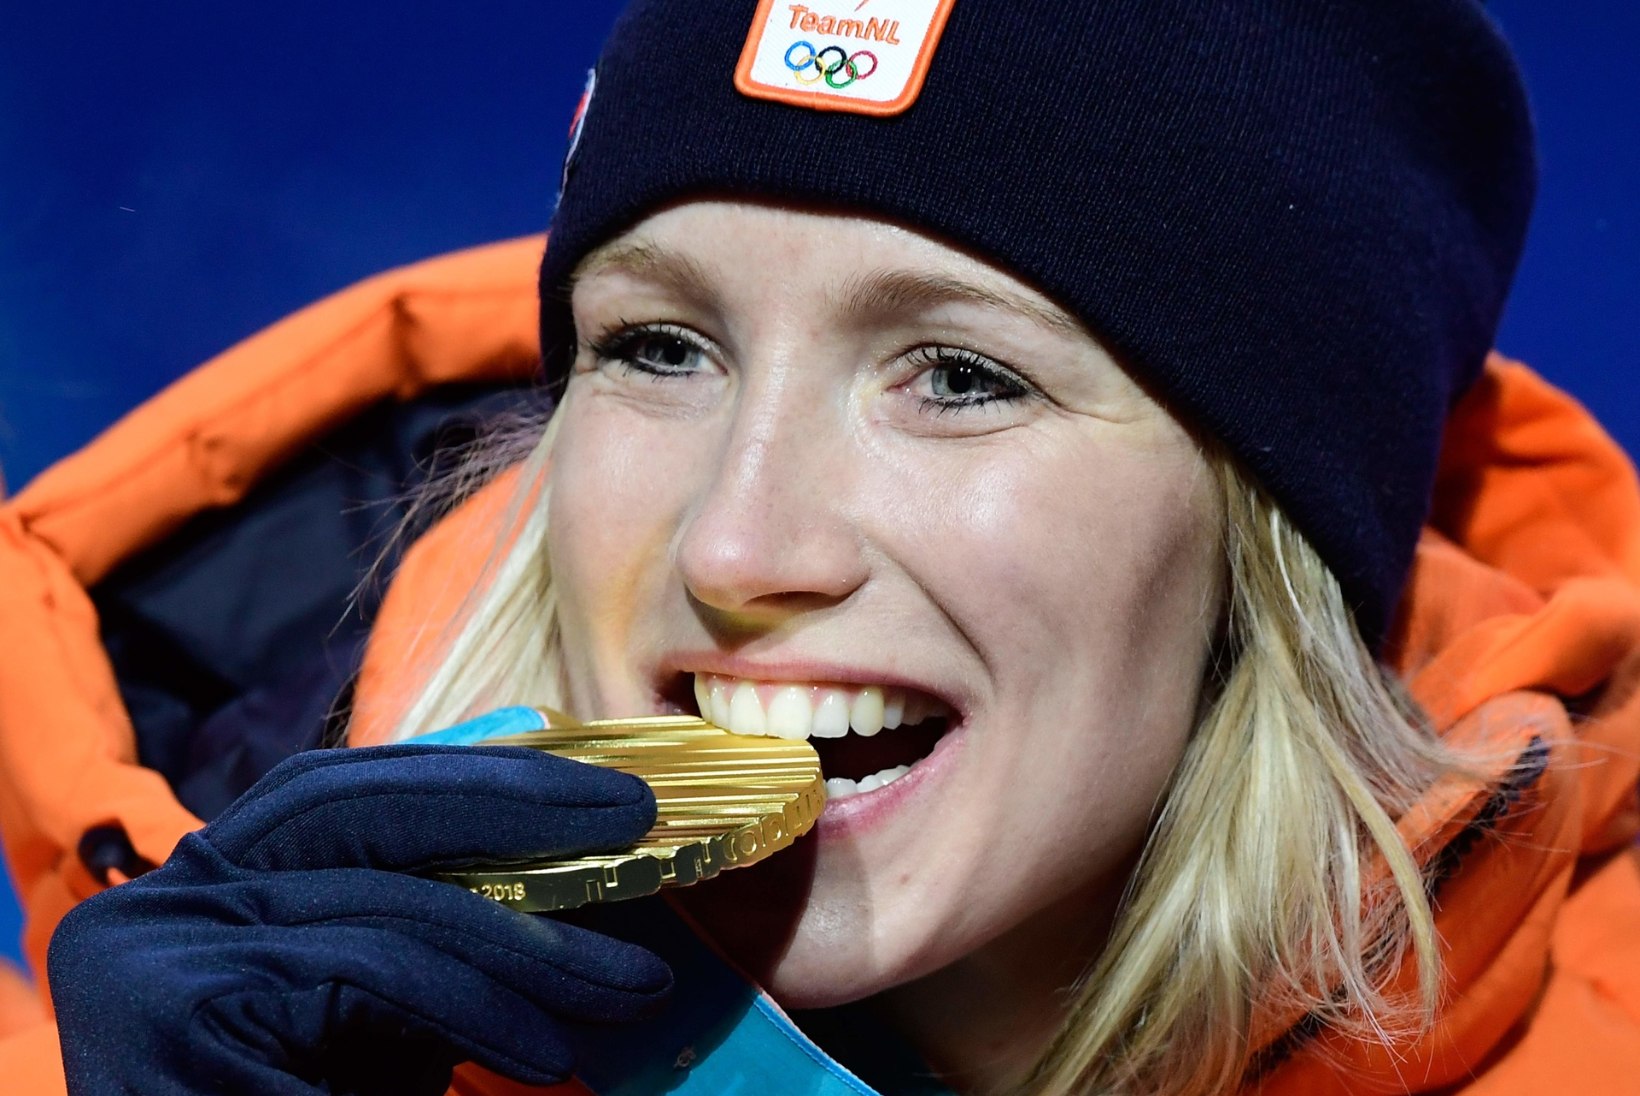 Pyeongchang 2018: Norra medalisadu, doping ja ajalooline geisuudlus